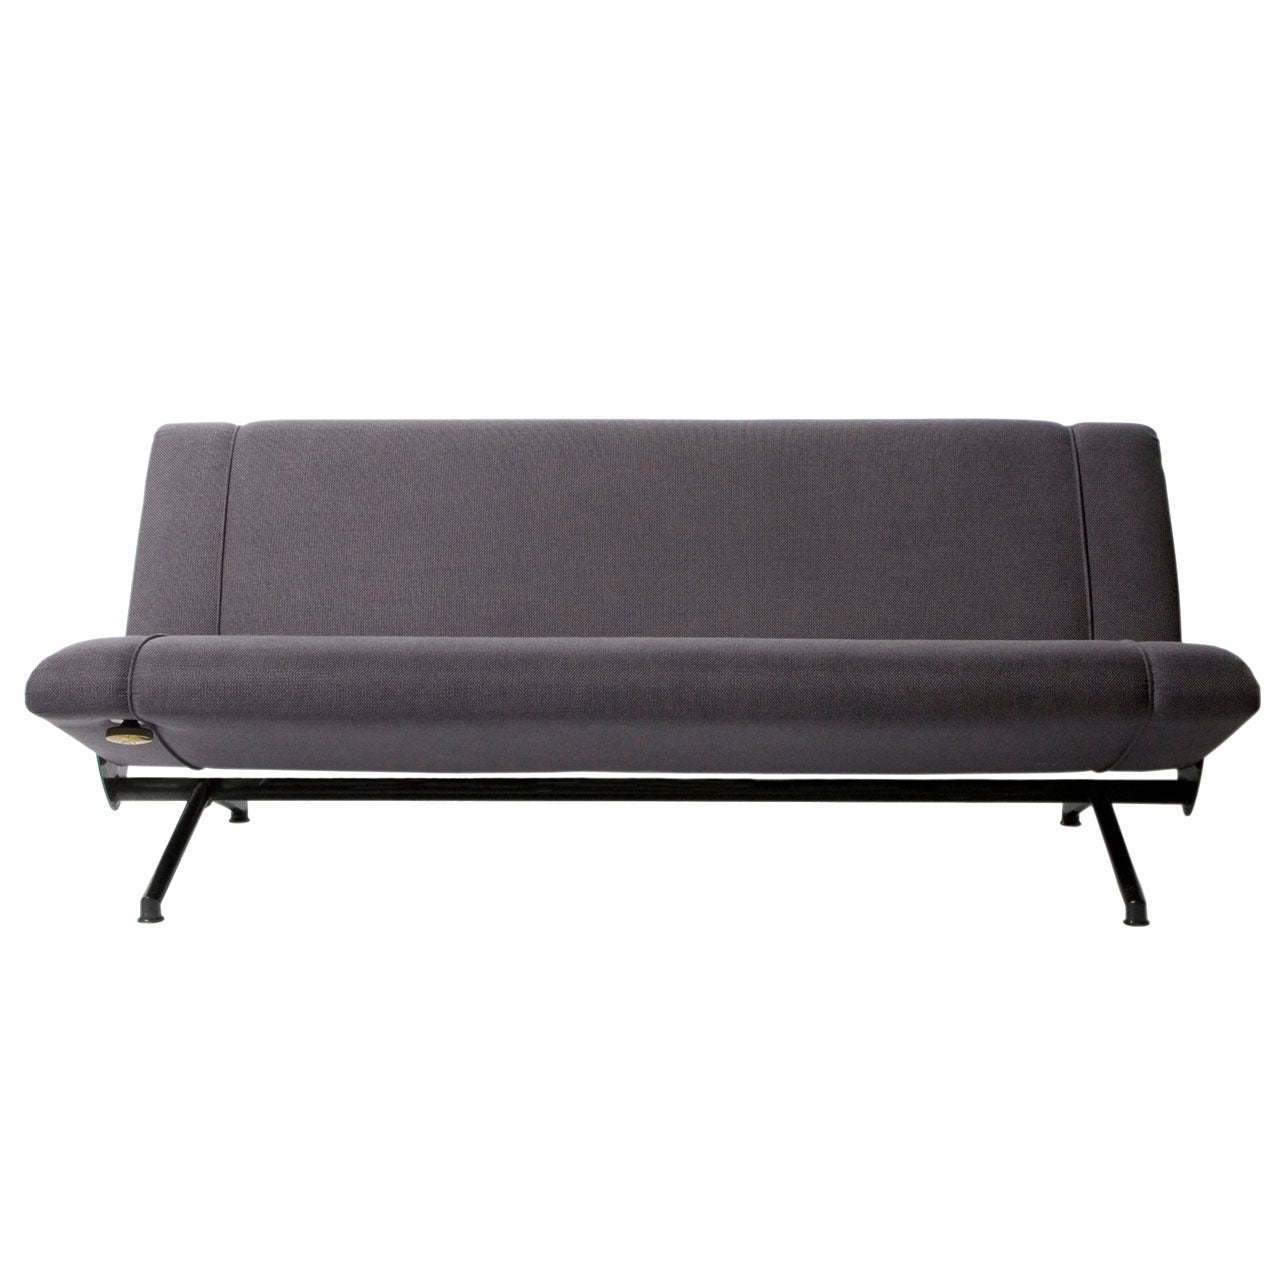 D70 Tecno Sofa For Sale